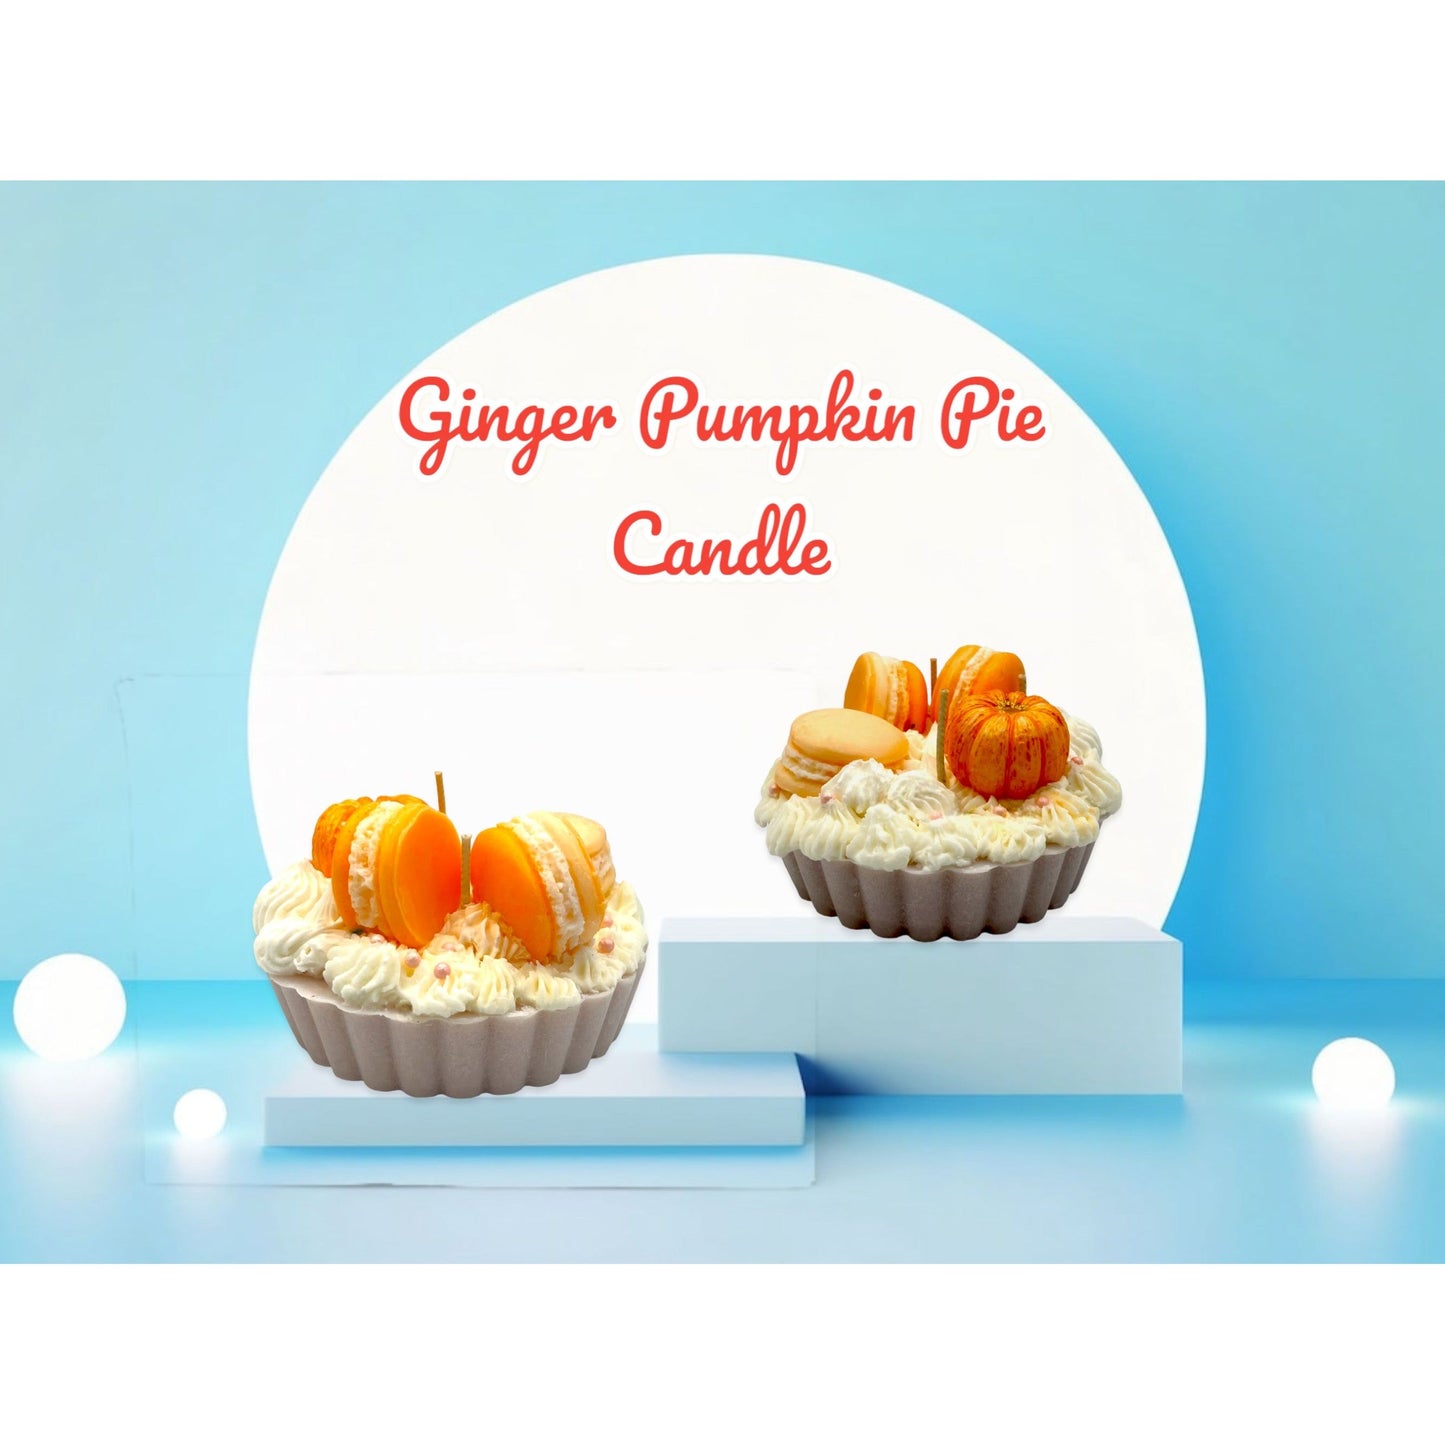 Ginger Pumpkin Pie Candle